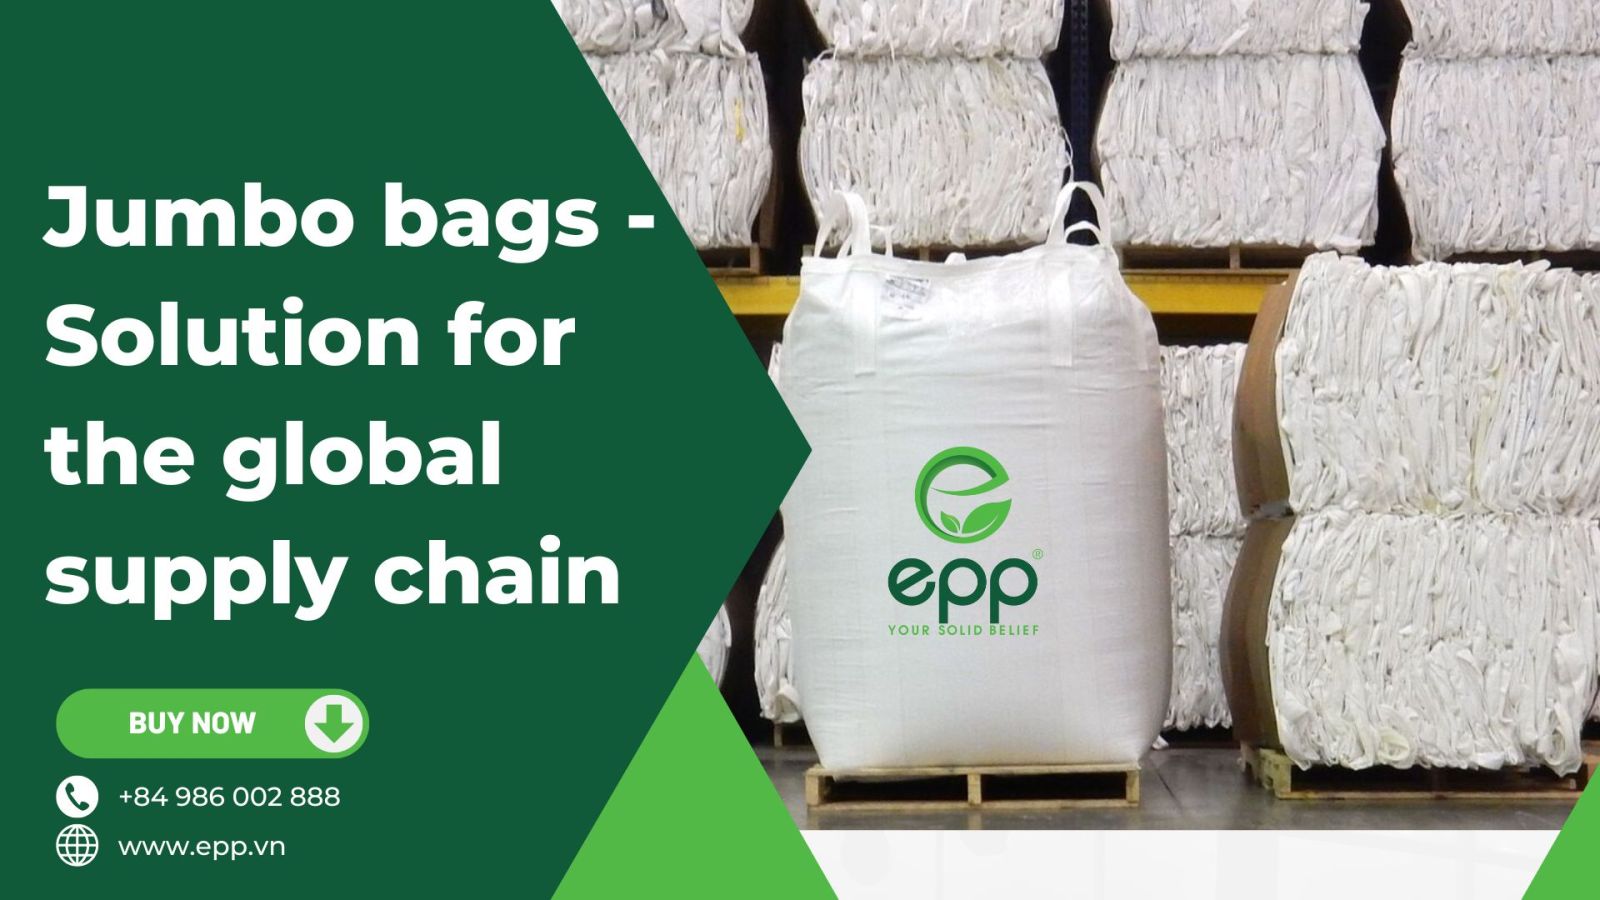 Jumbo-bags-Solution-for-the-global-supply-chain%20(1).jpg